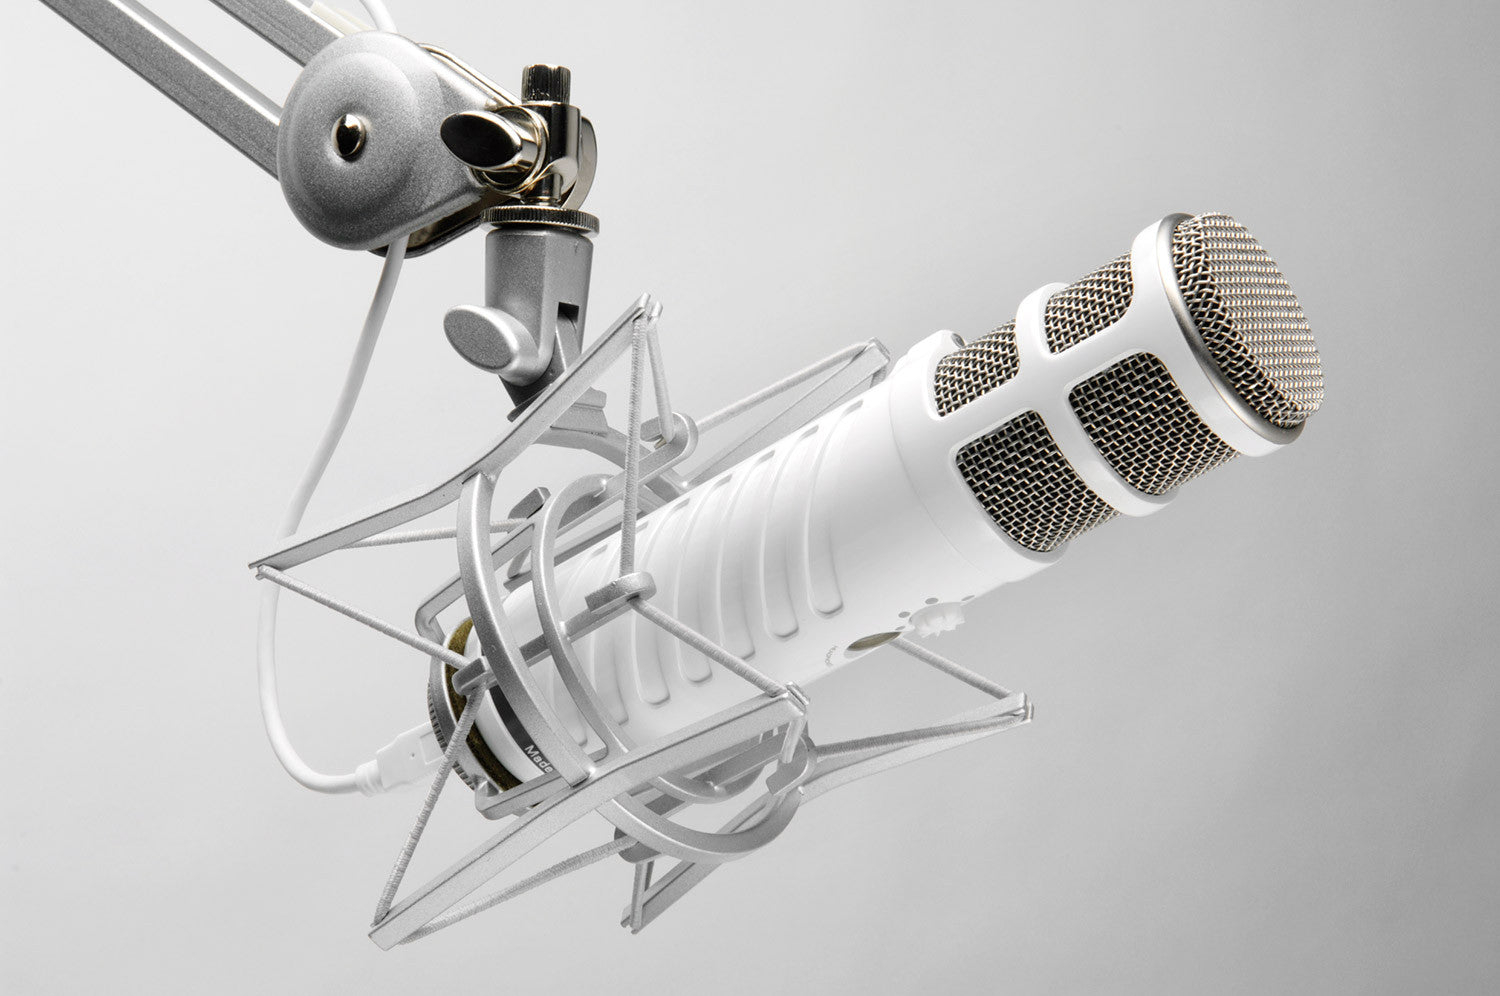 RODE Podcaster USB Broadcast Microphone - Audio - RØDE - Helix Camera 